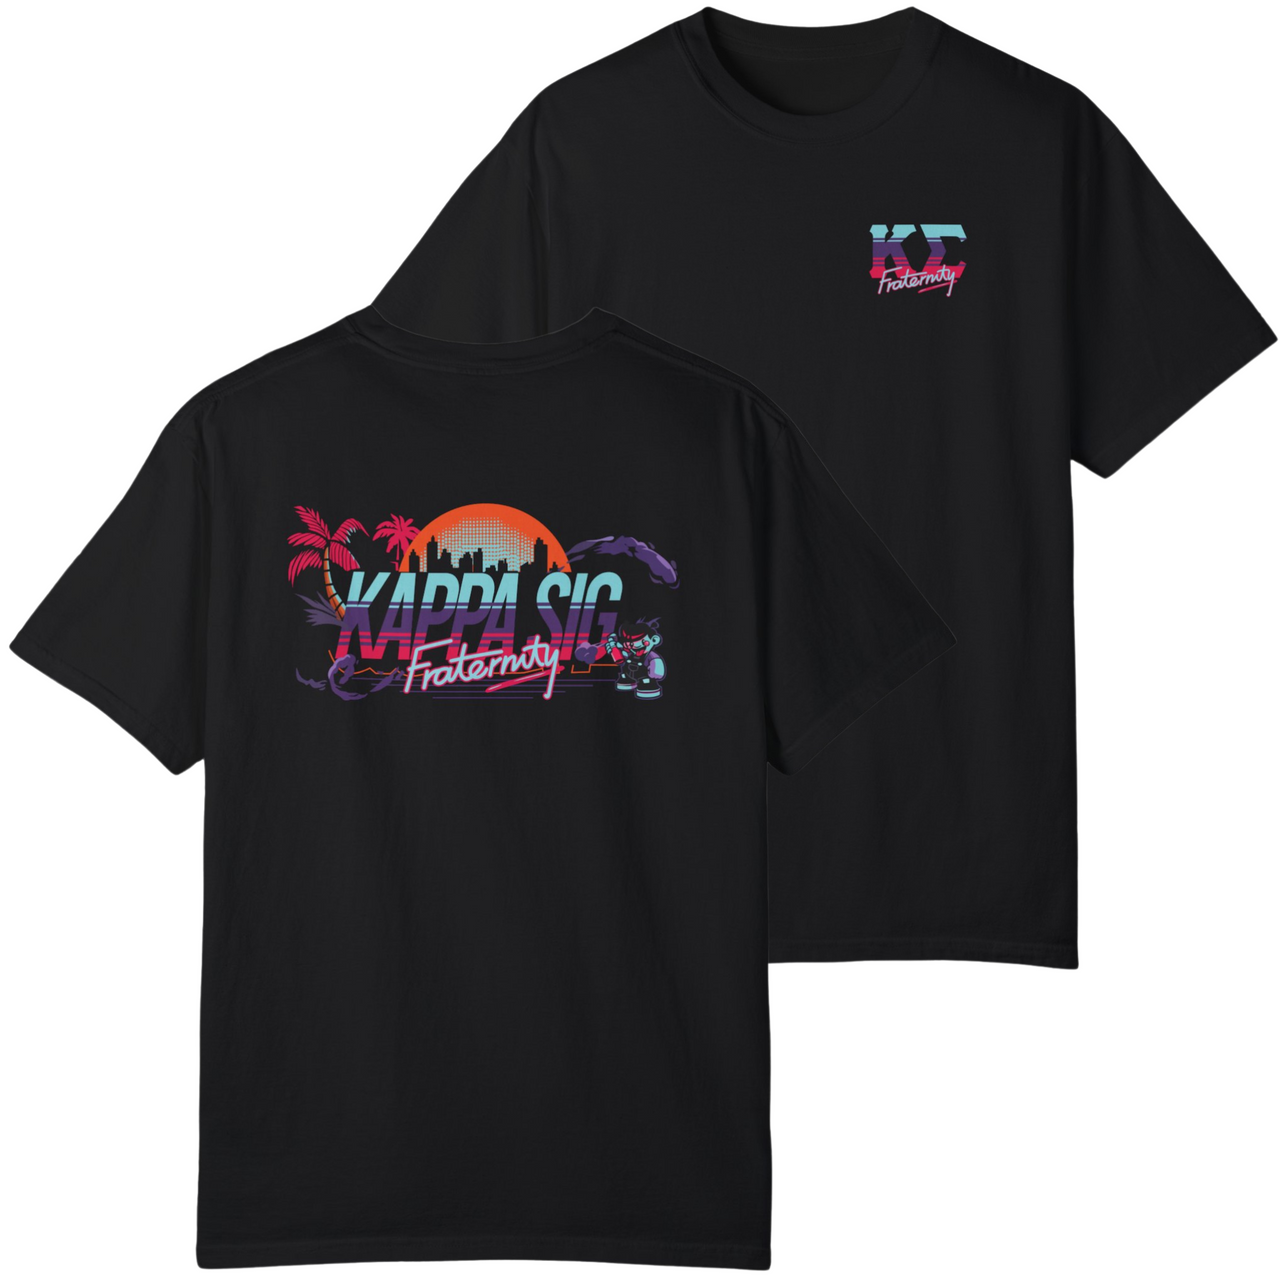 Kappa Sigma Graphic T-Shirt | Jump Street